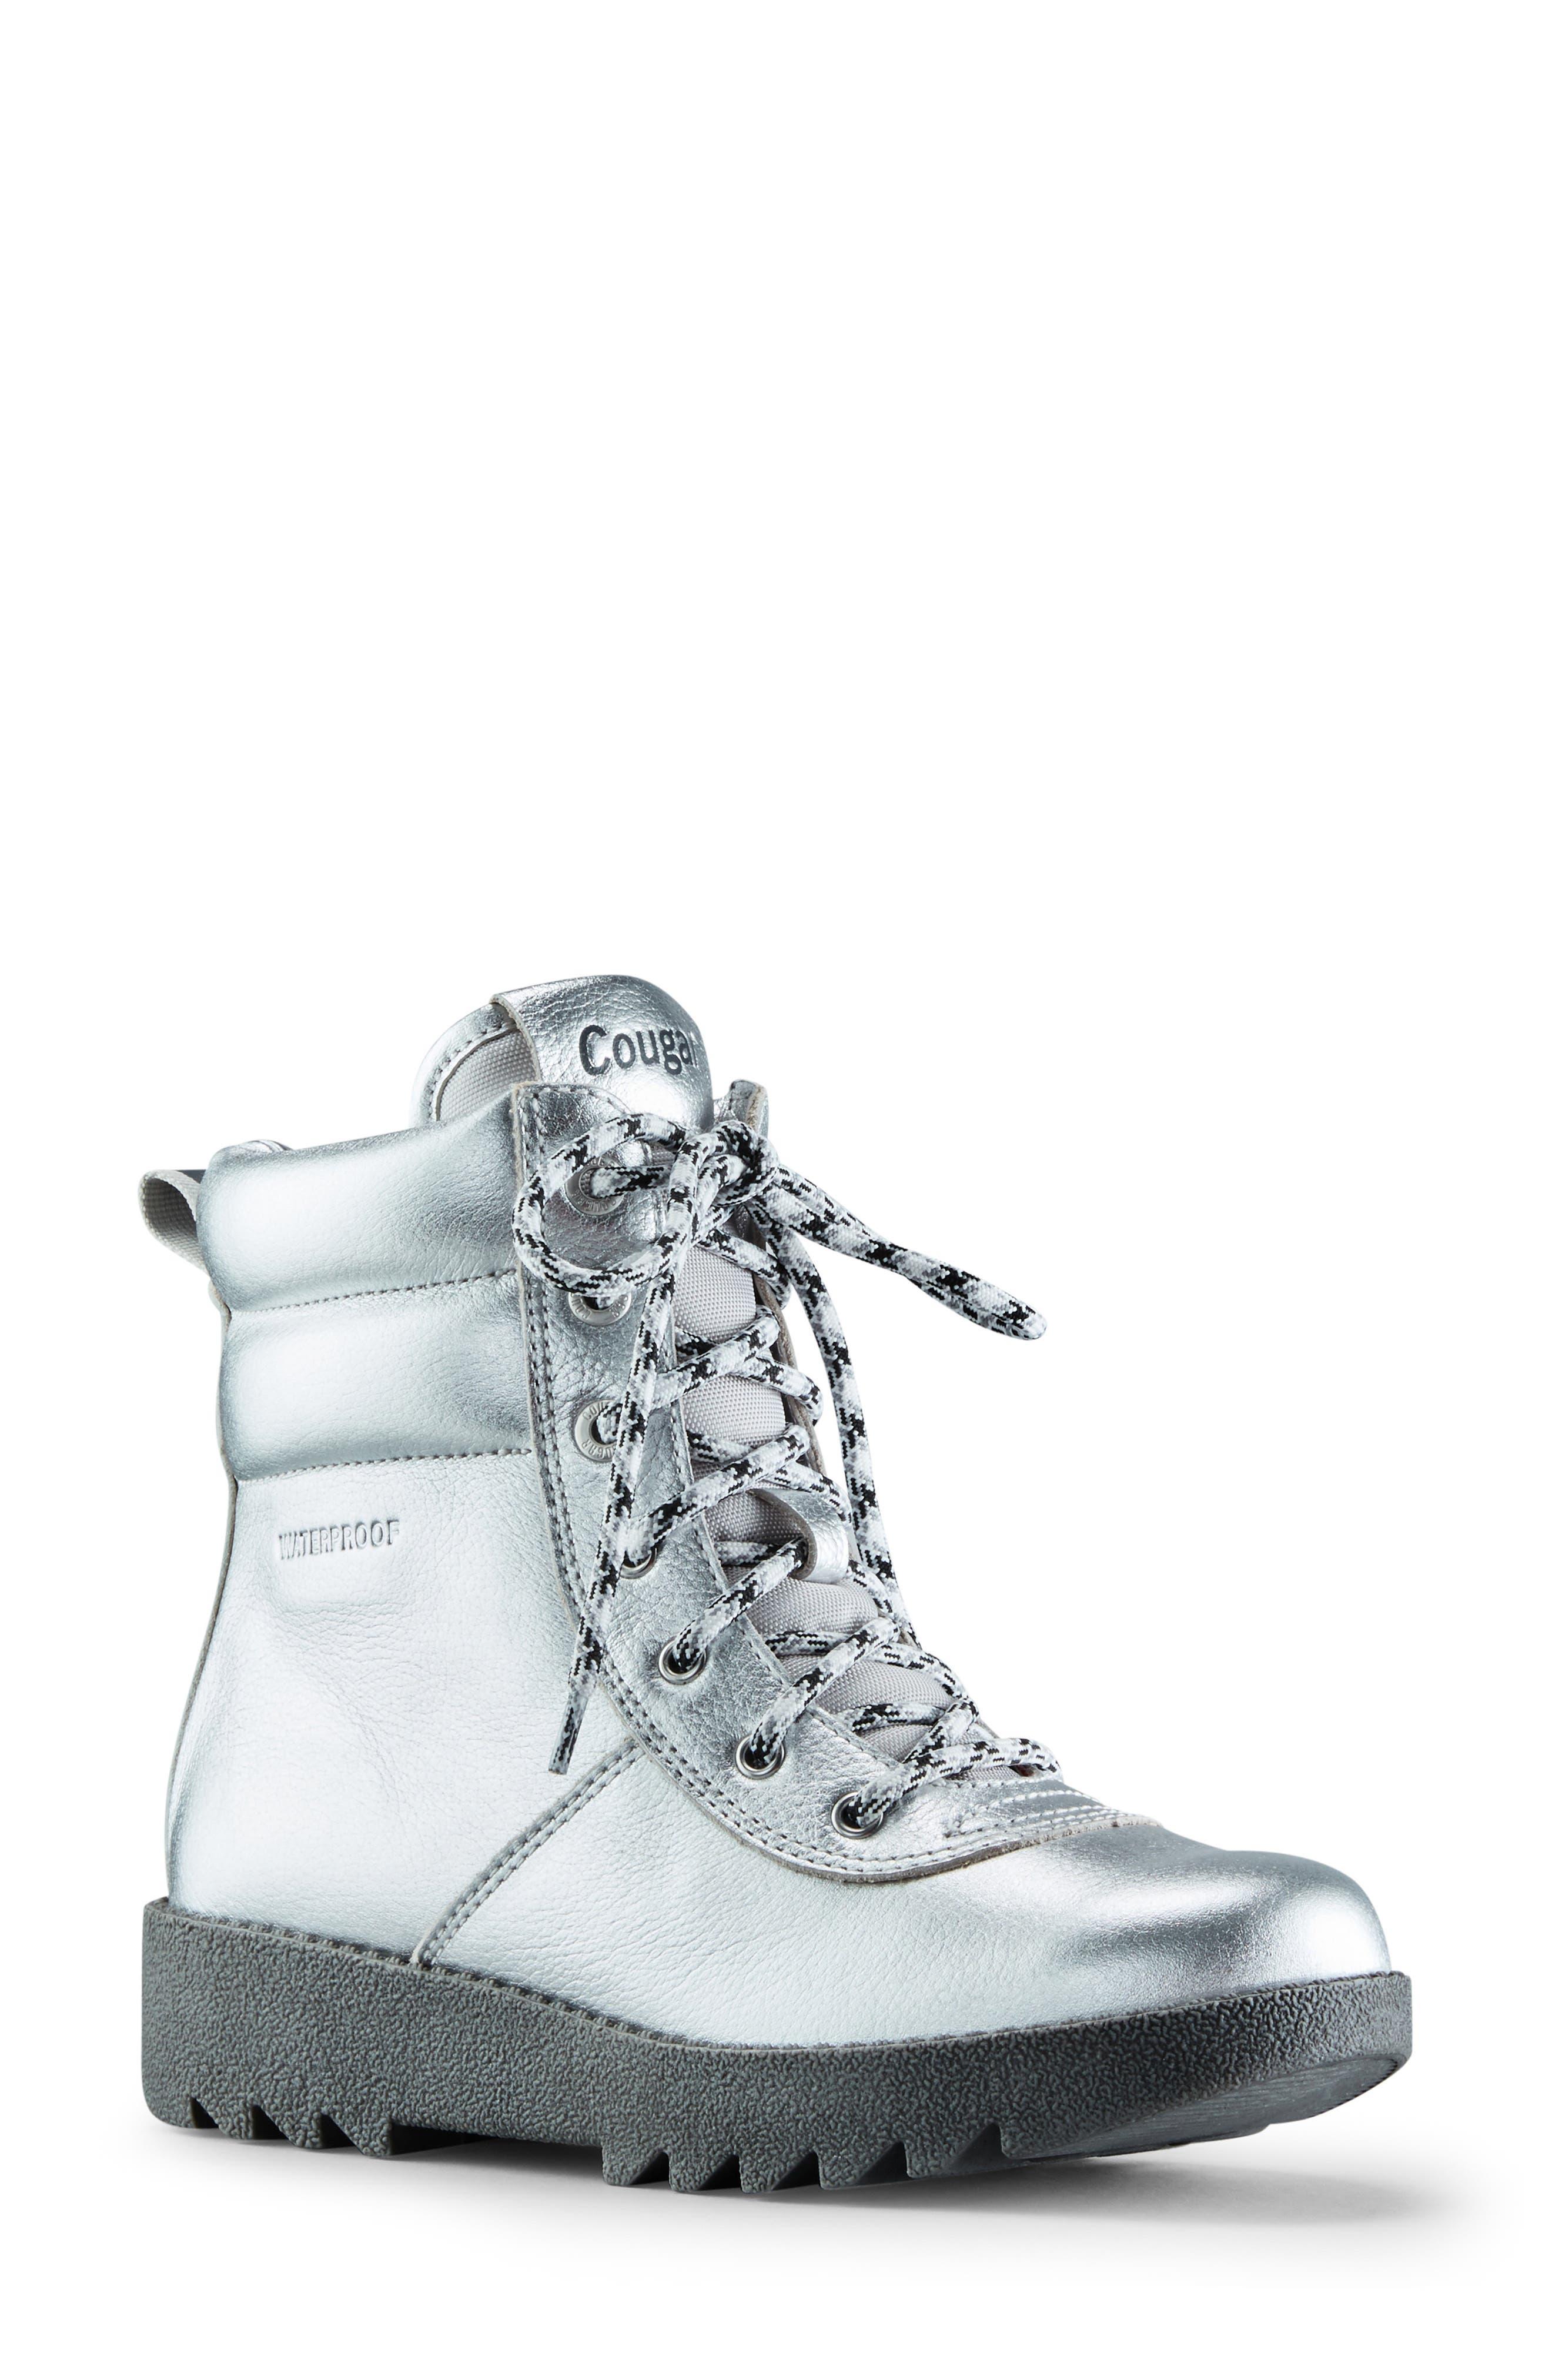 Cougar Shoes Pax Waterproof Bootie In Silver At Nordstrom Rack in 